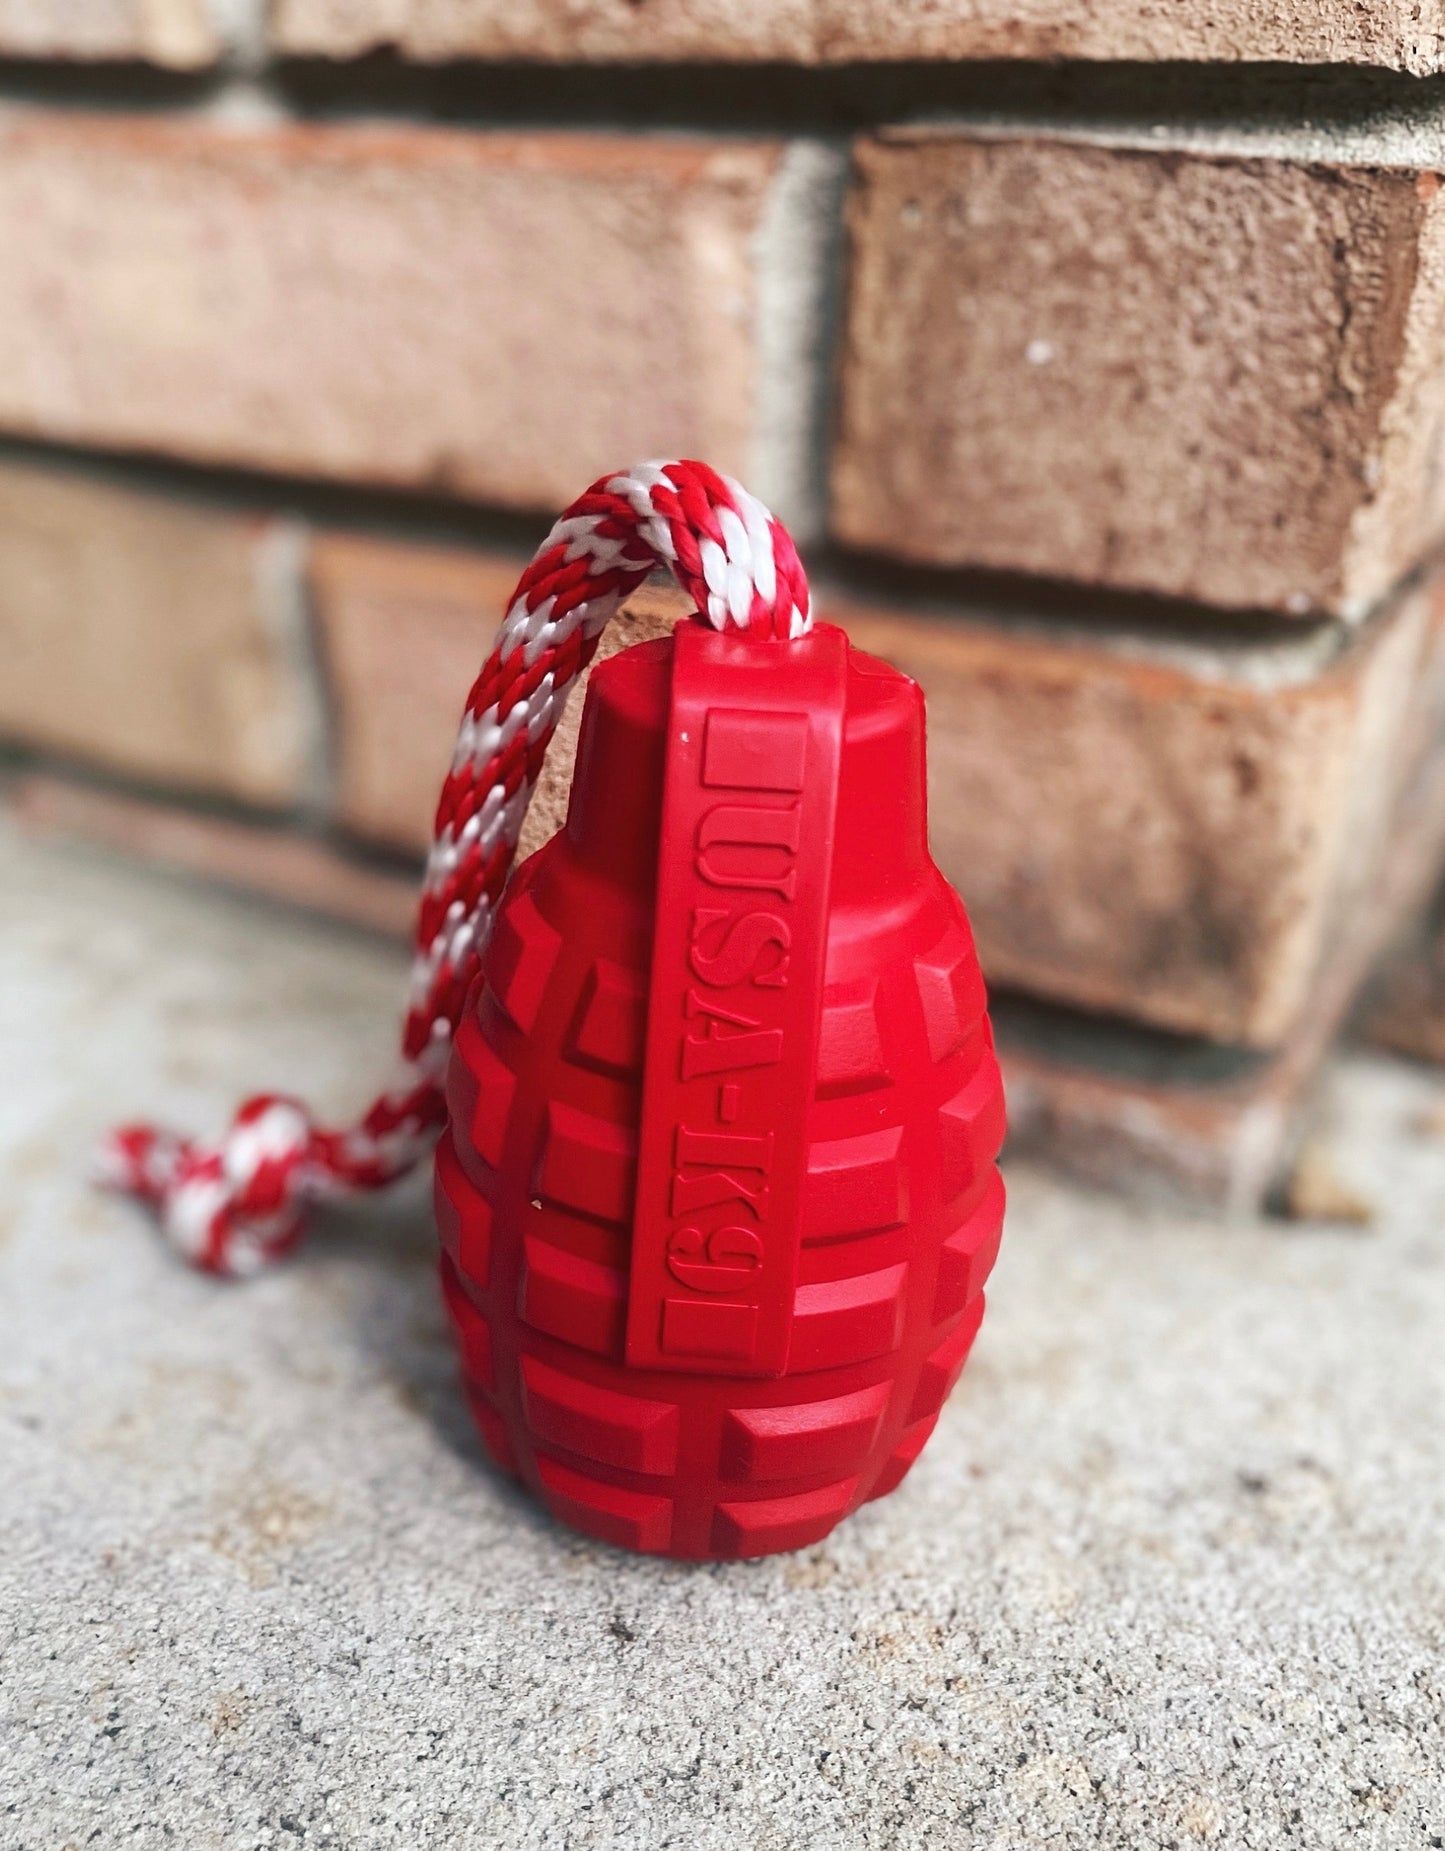 USA-K9 Grenade Reward Toy